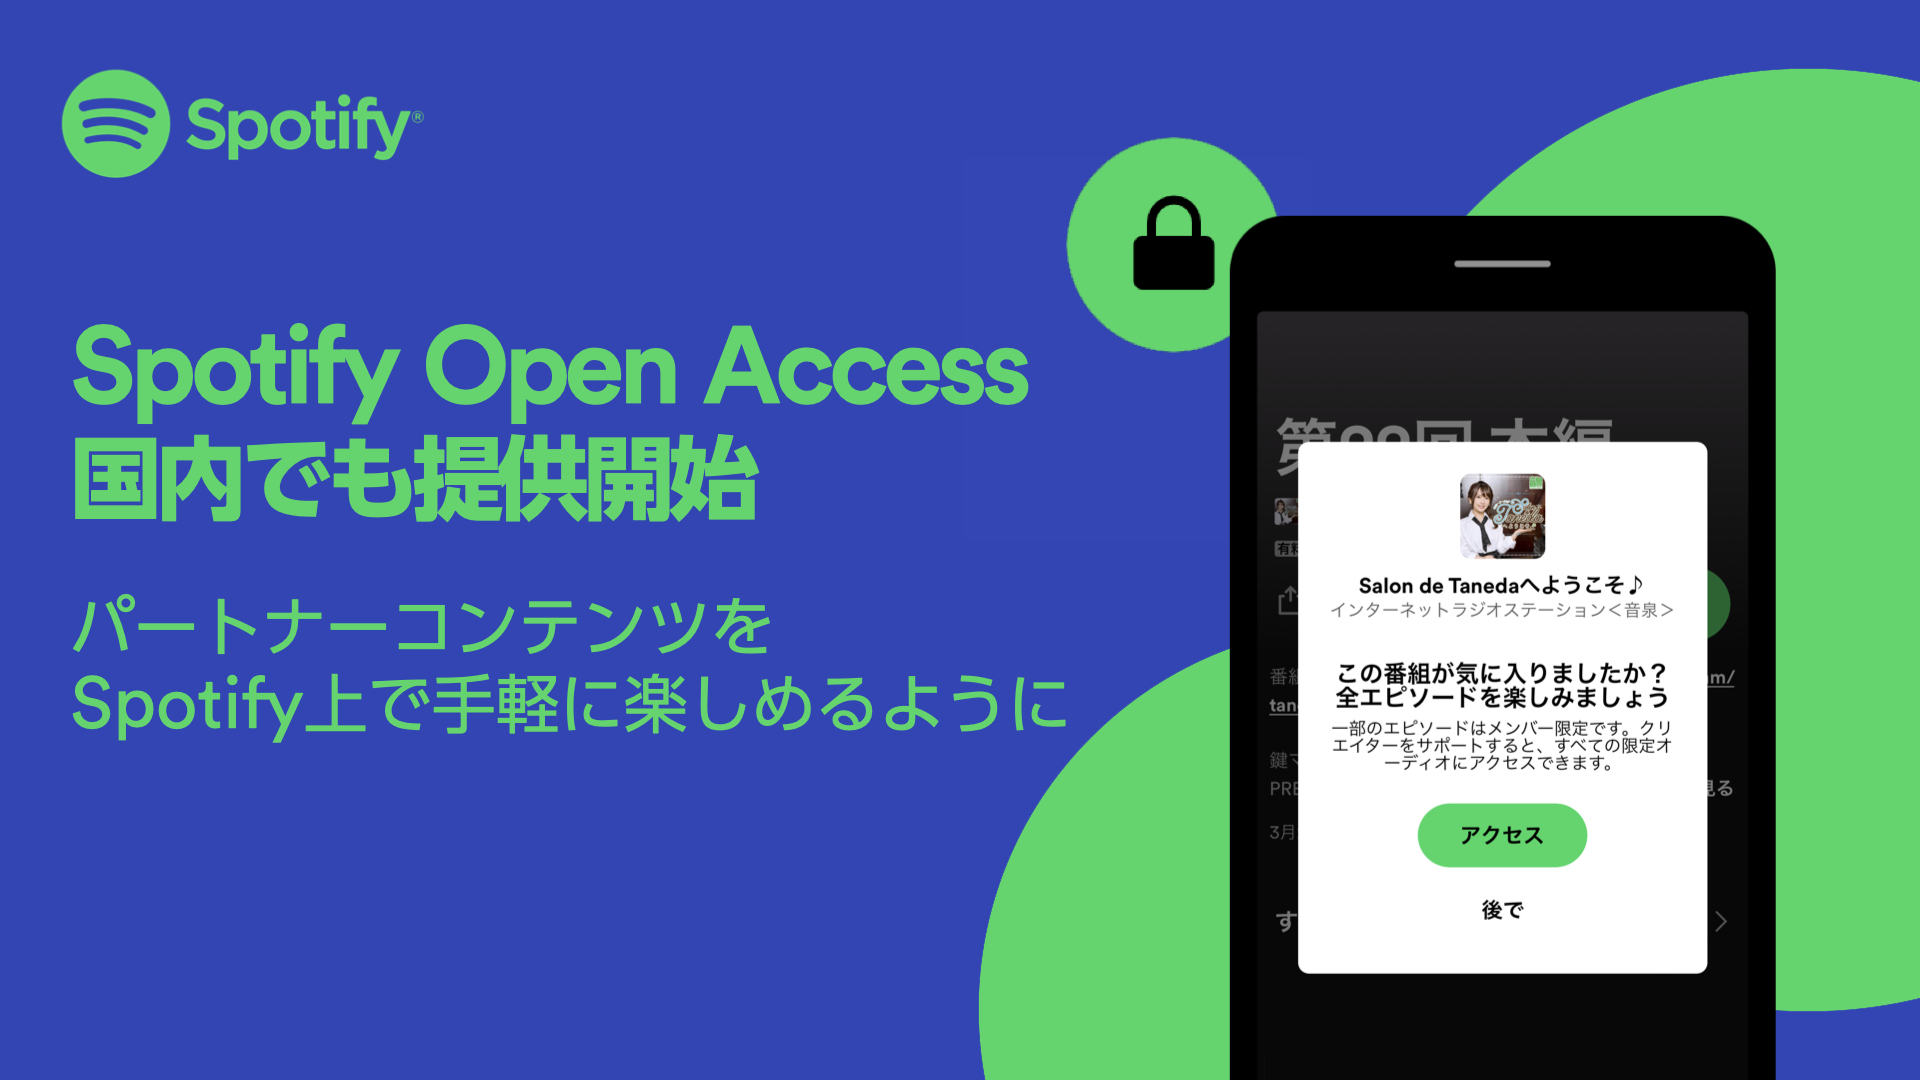 「Spotify Open Access」国内で提供開始の画像